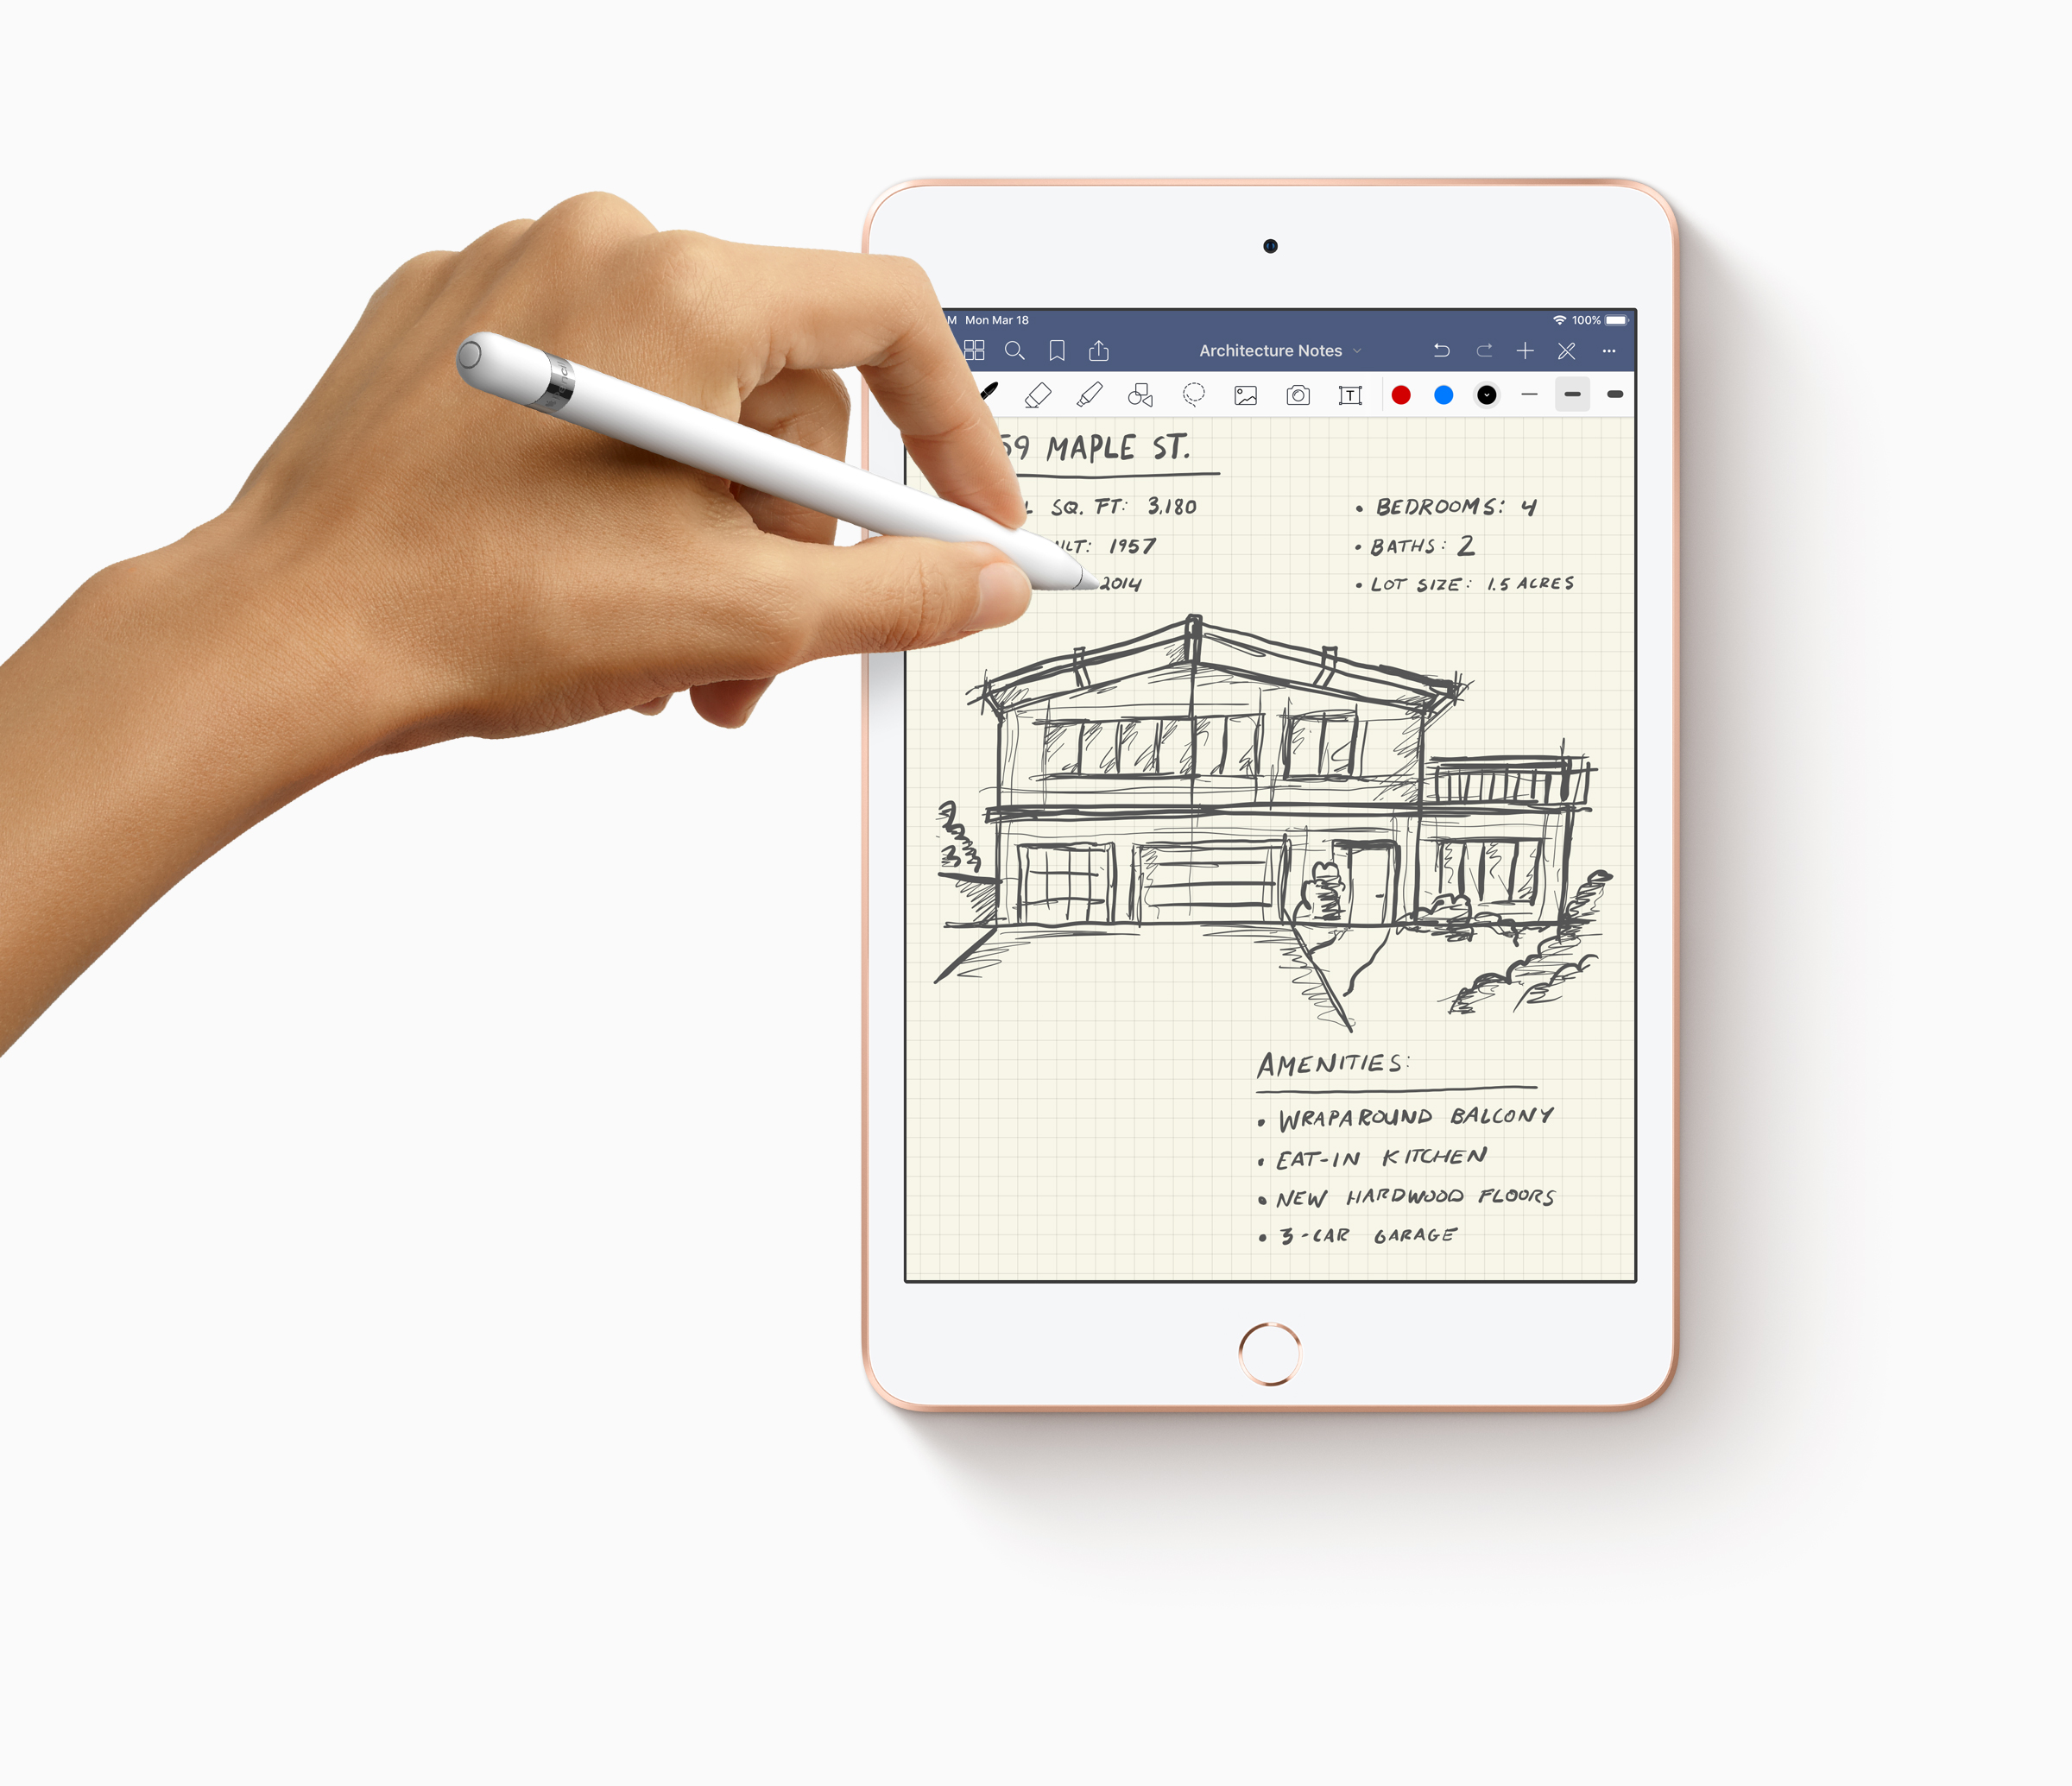 New-iPad-Mini-Apple-Pencil-with-hands-drawing-03162019.jpg